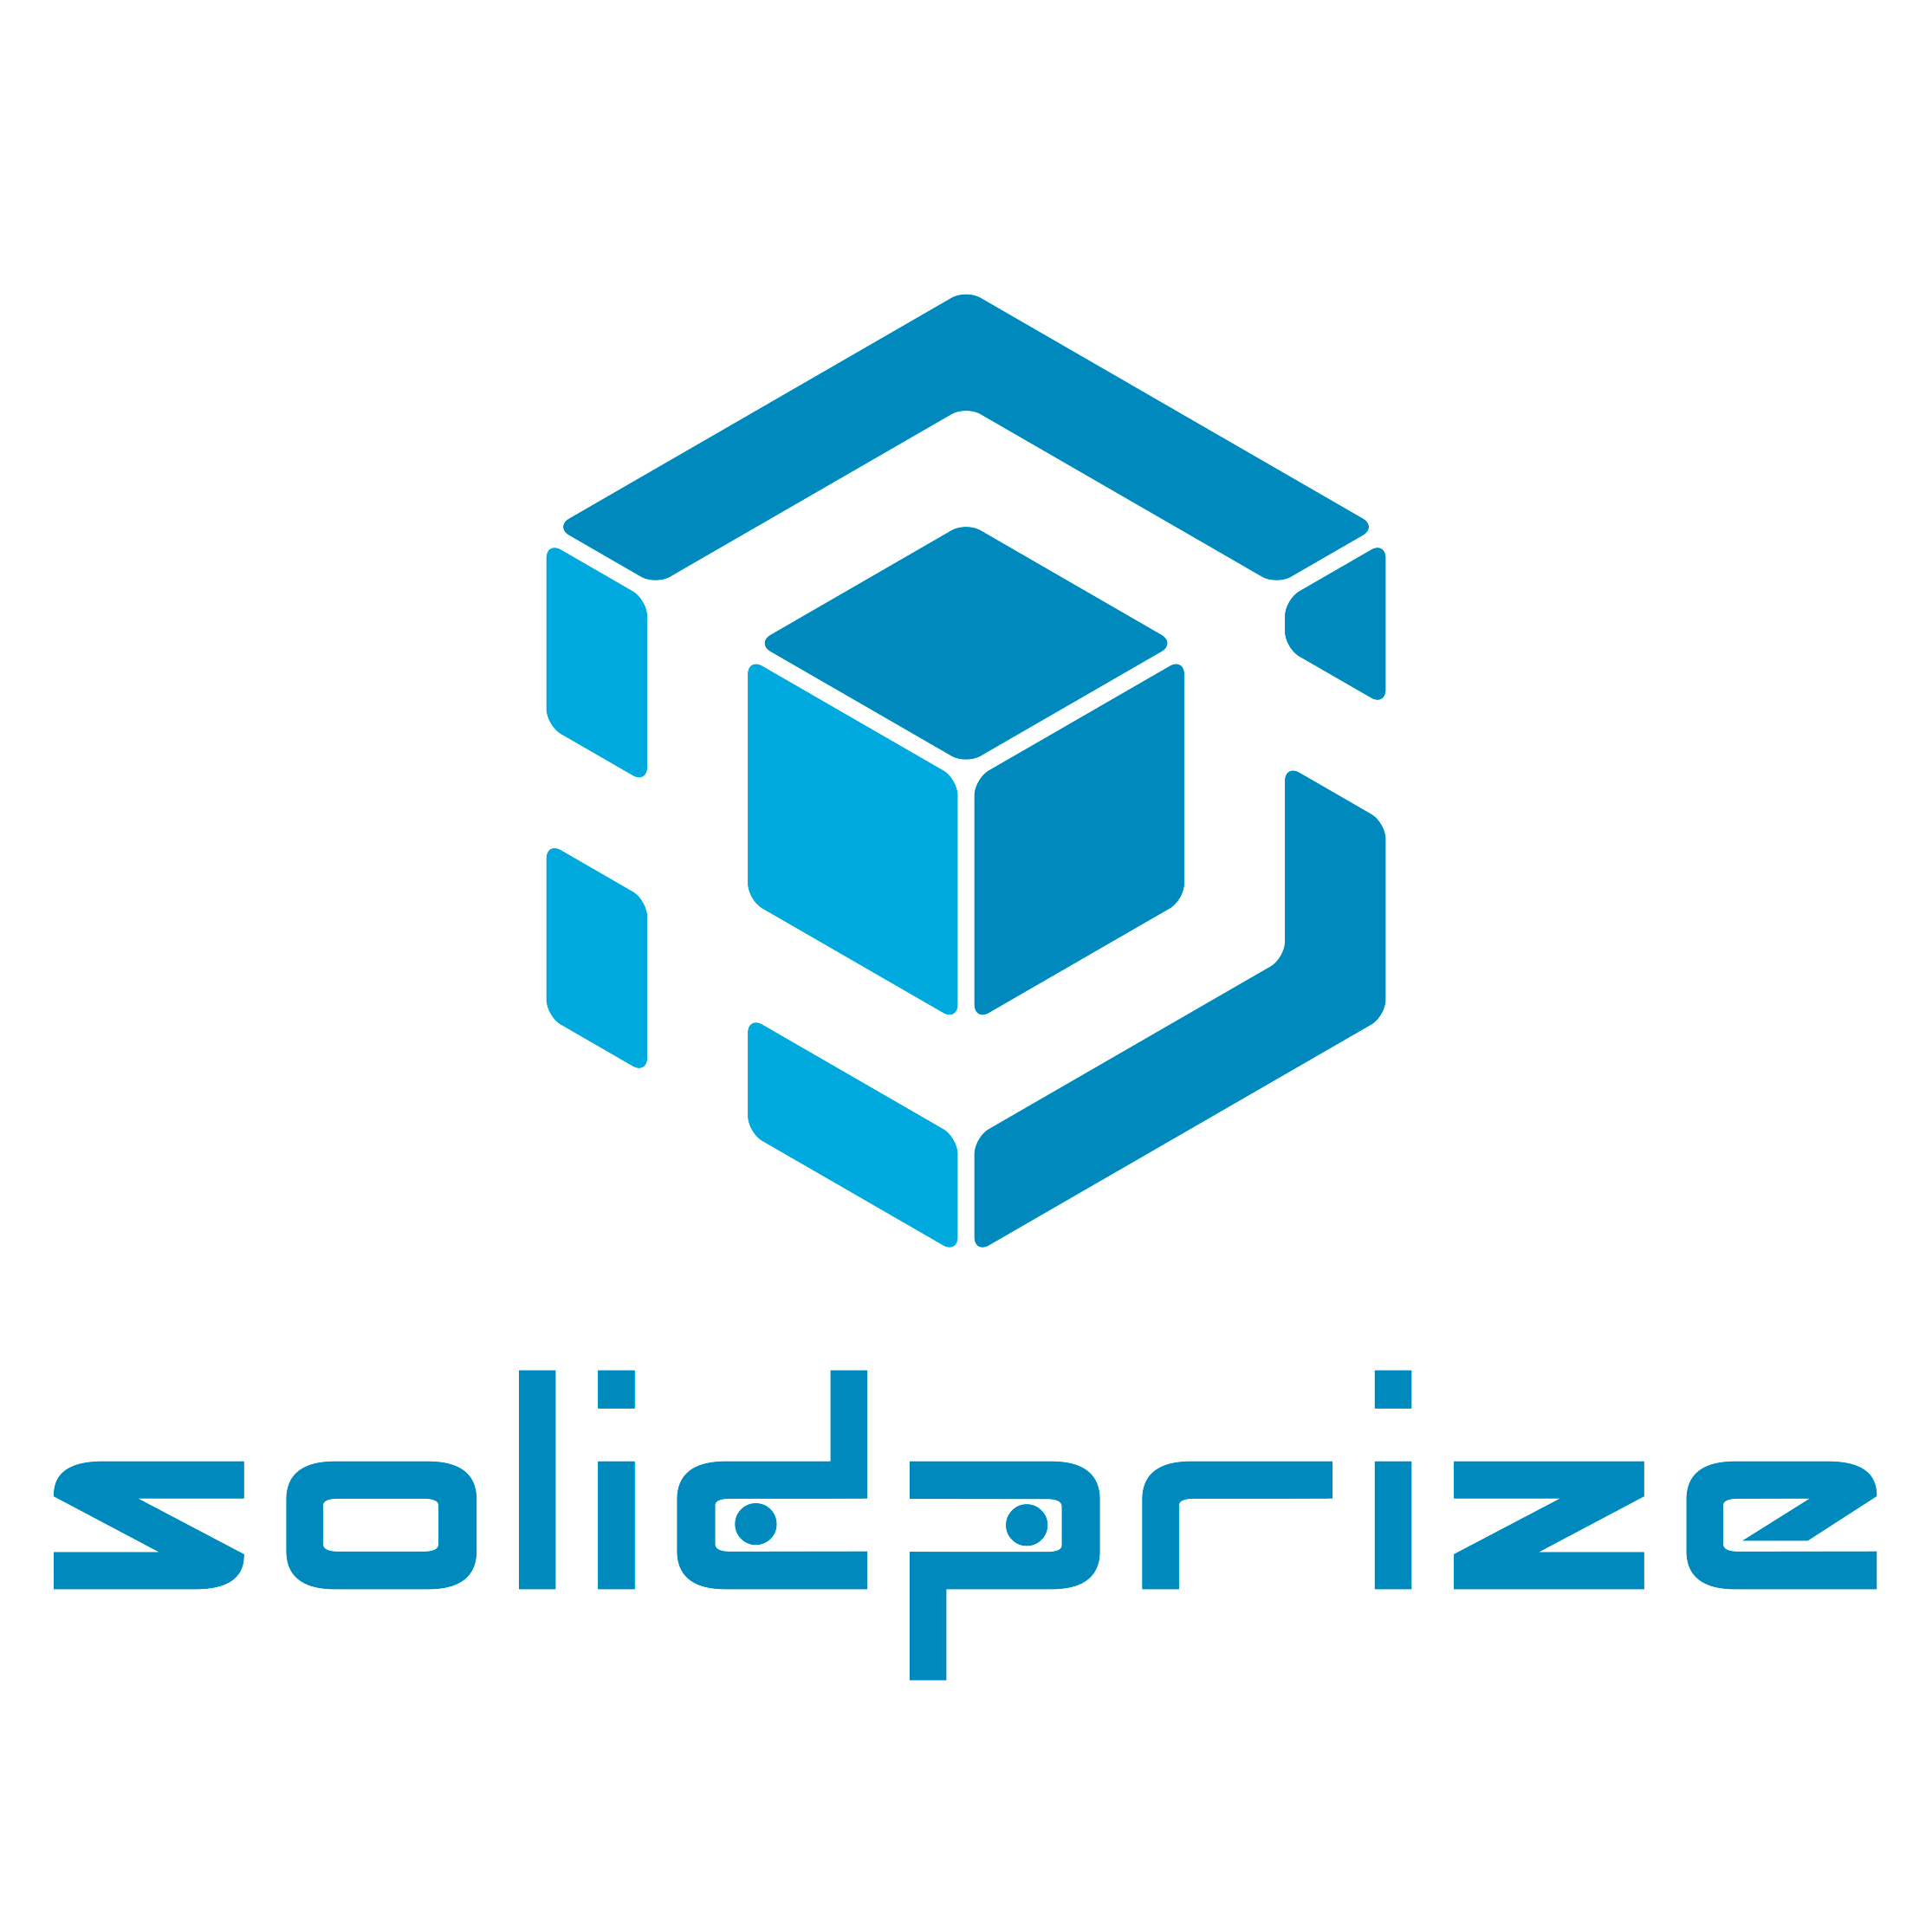 solidprize_logo_01